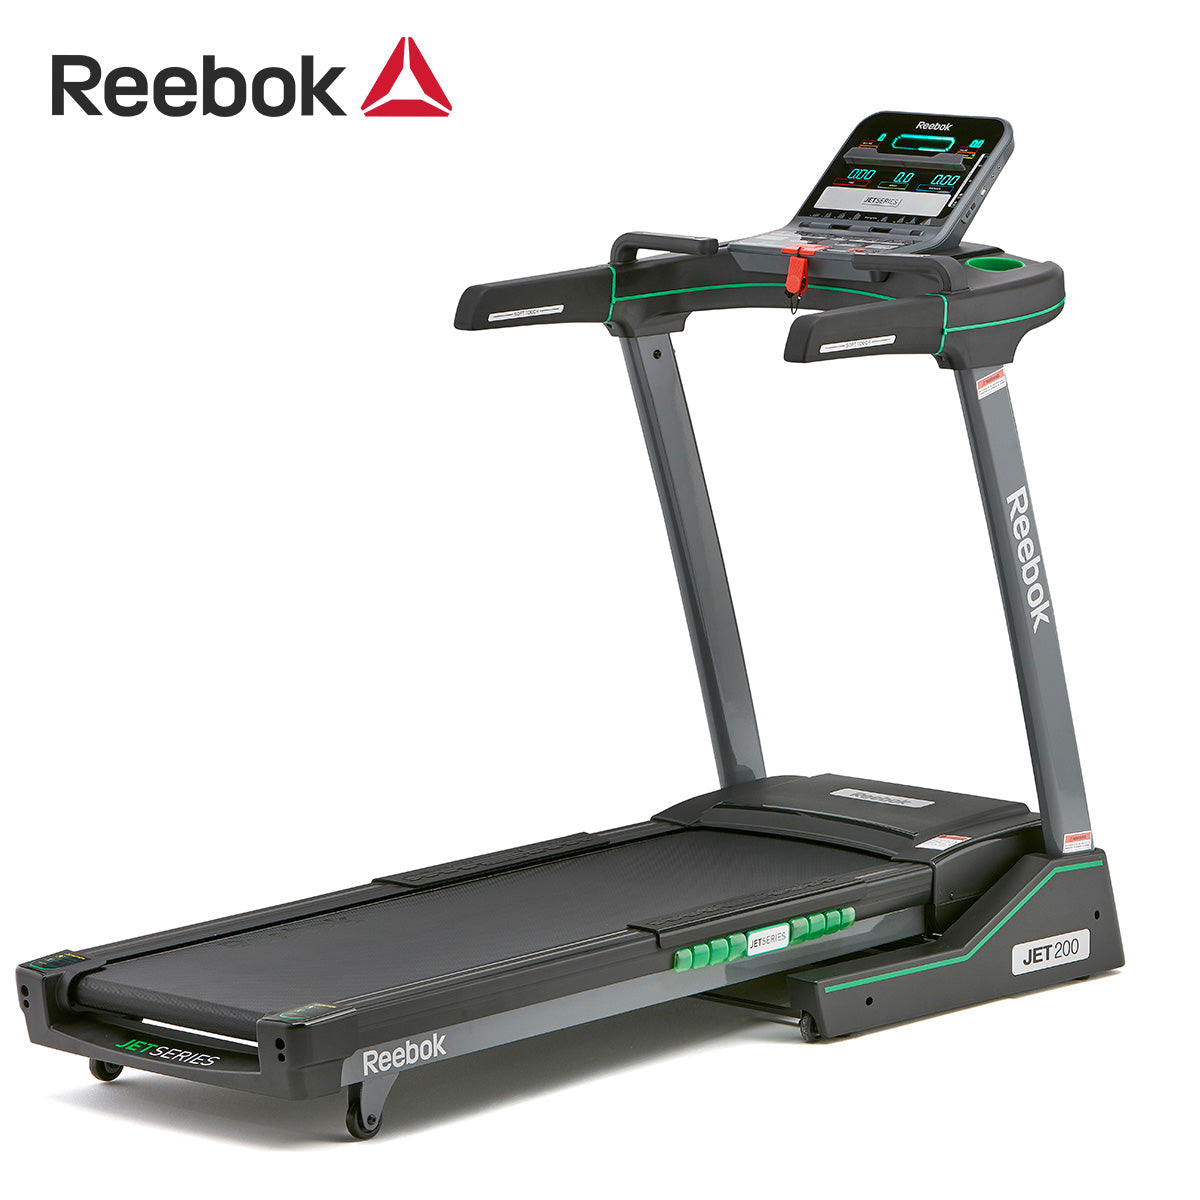 Reebok Jet 200 Series Treadmill with Bluetooth Home Gym Equipment